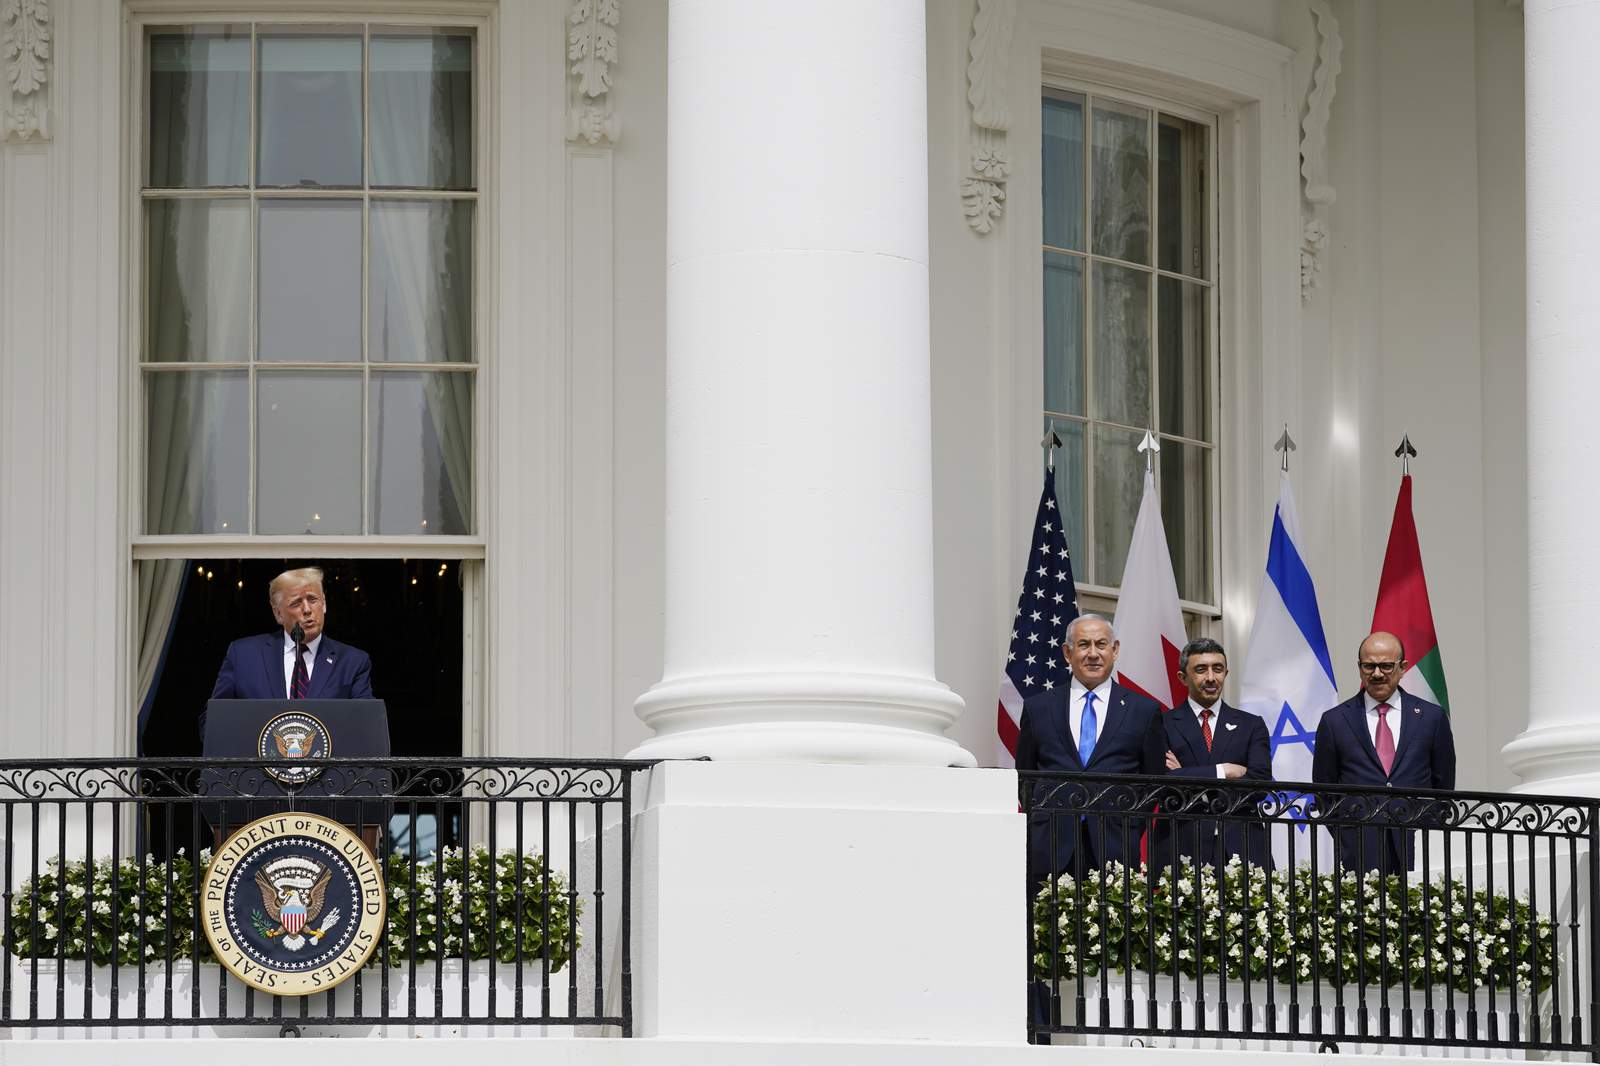 Trump presides as Israel, 2 Arab states sign historic pacts